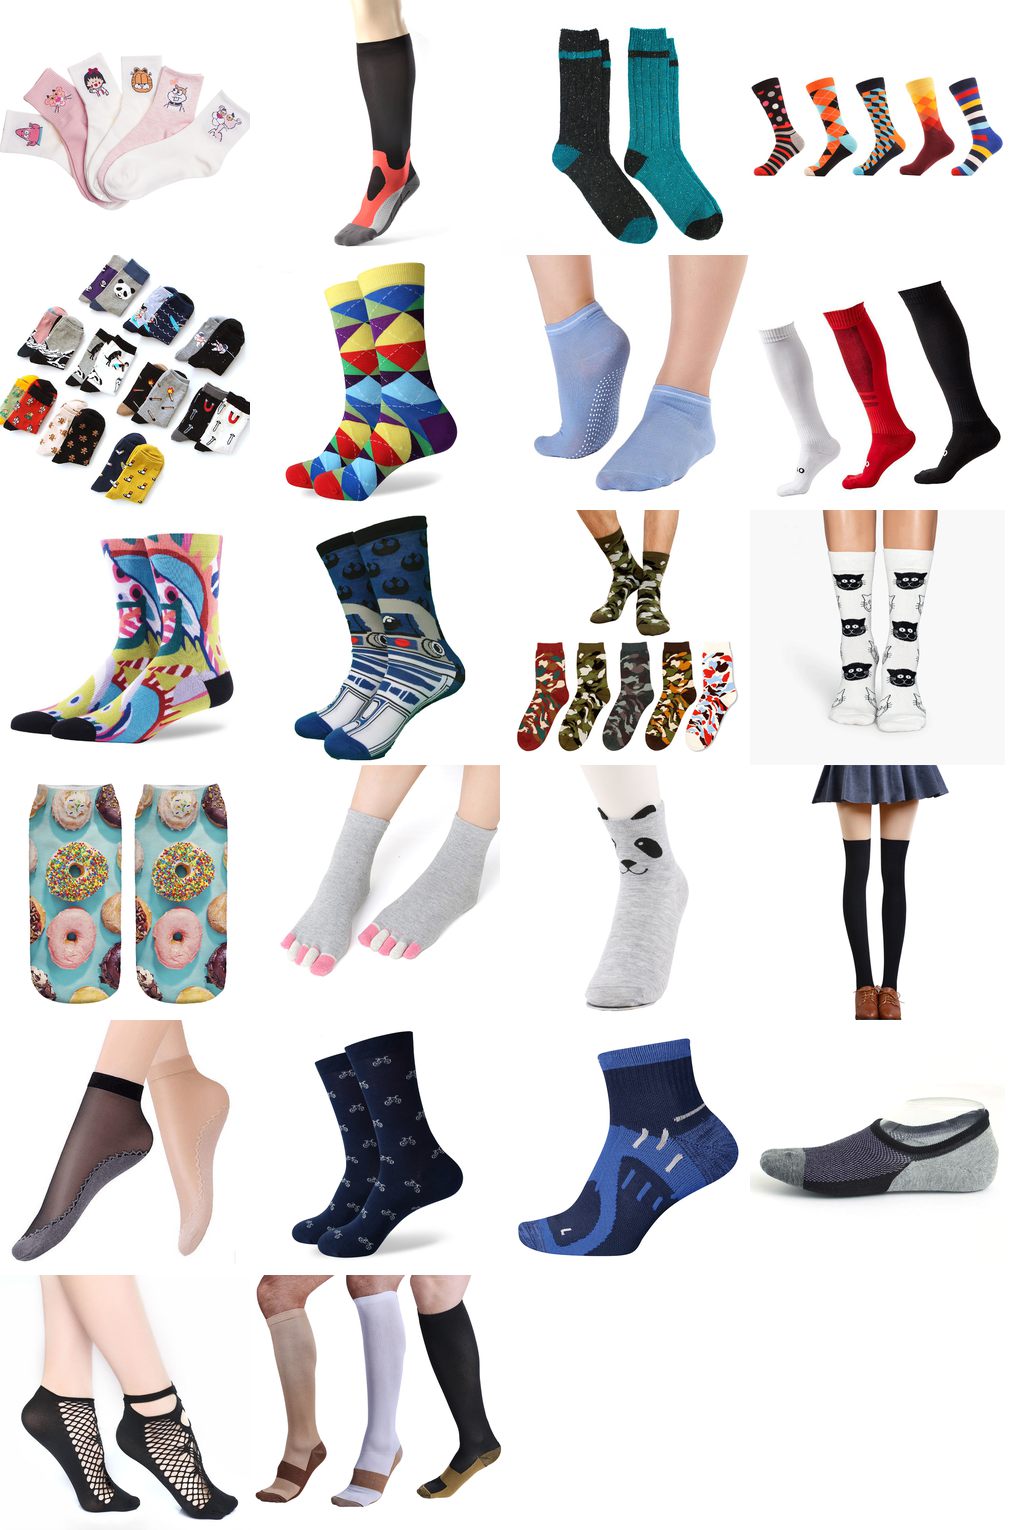 wholesale socks from china